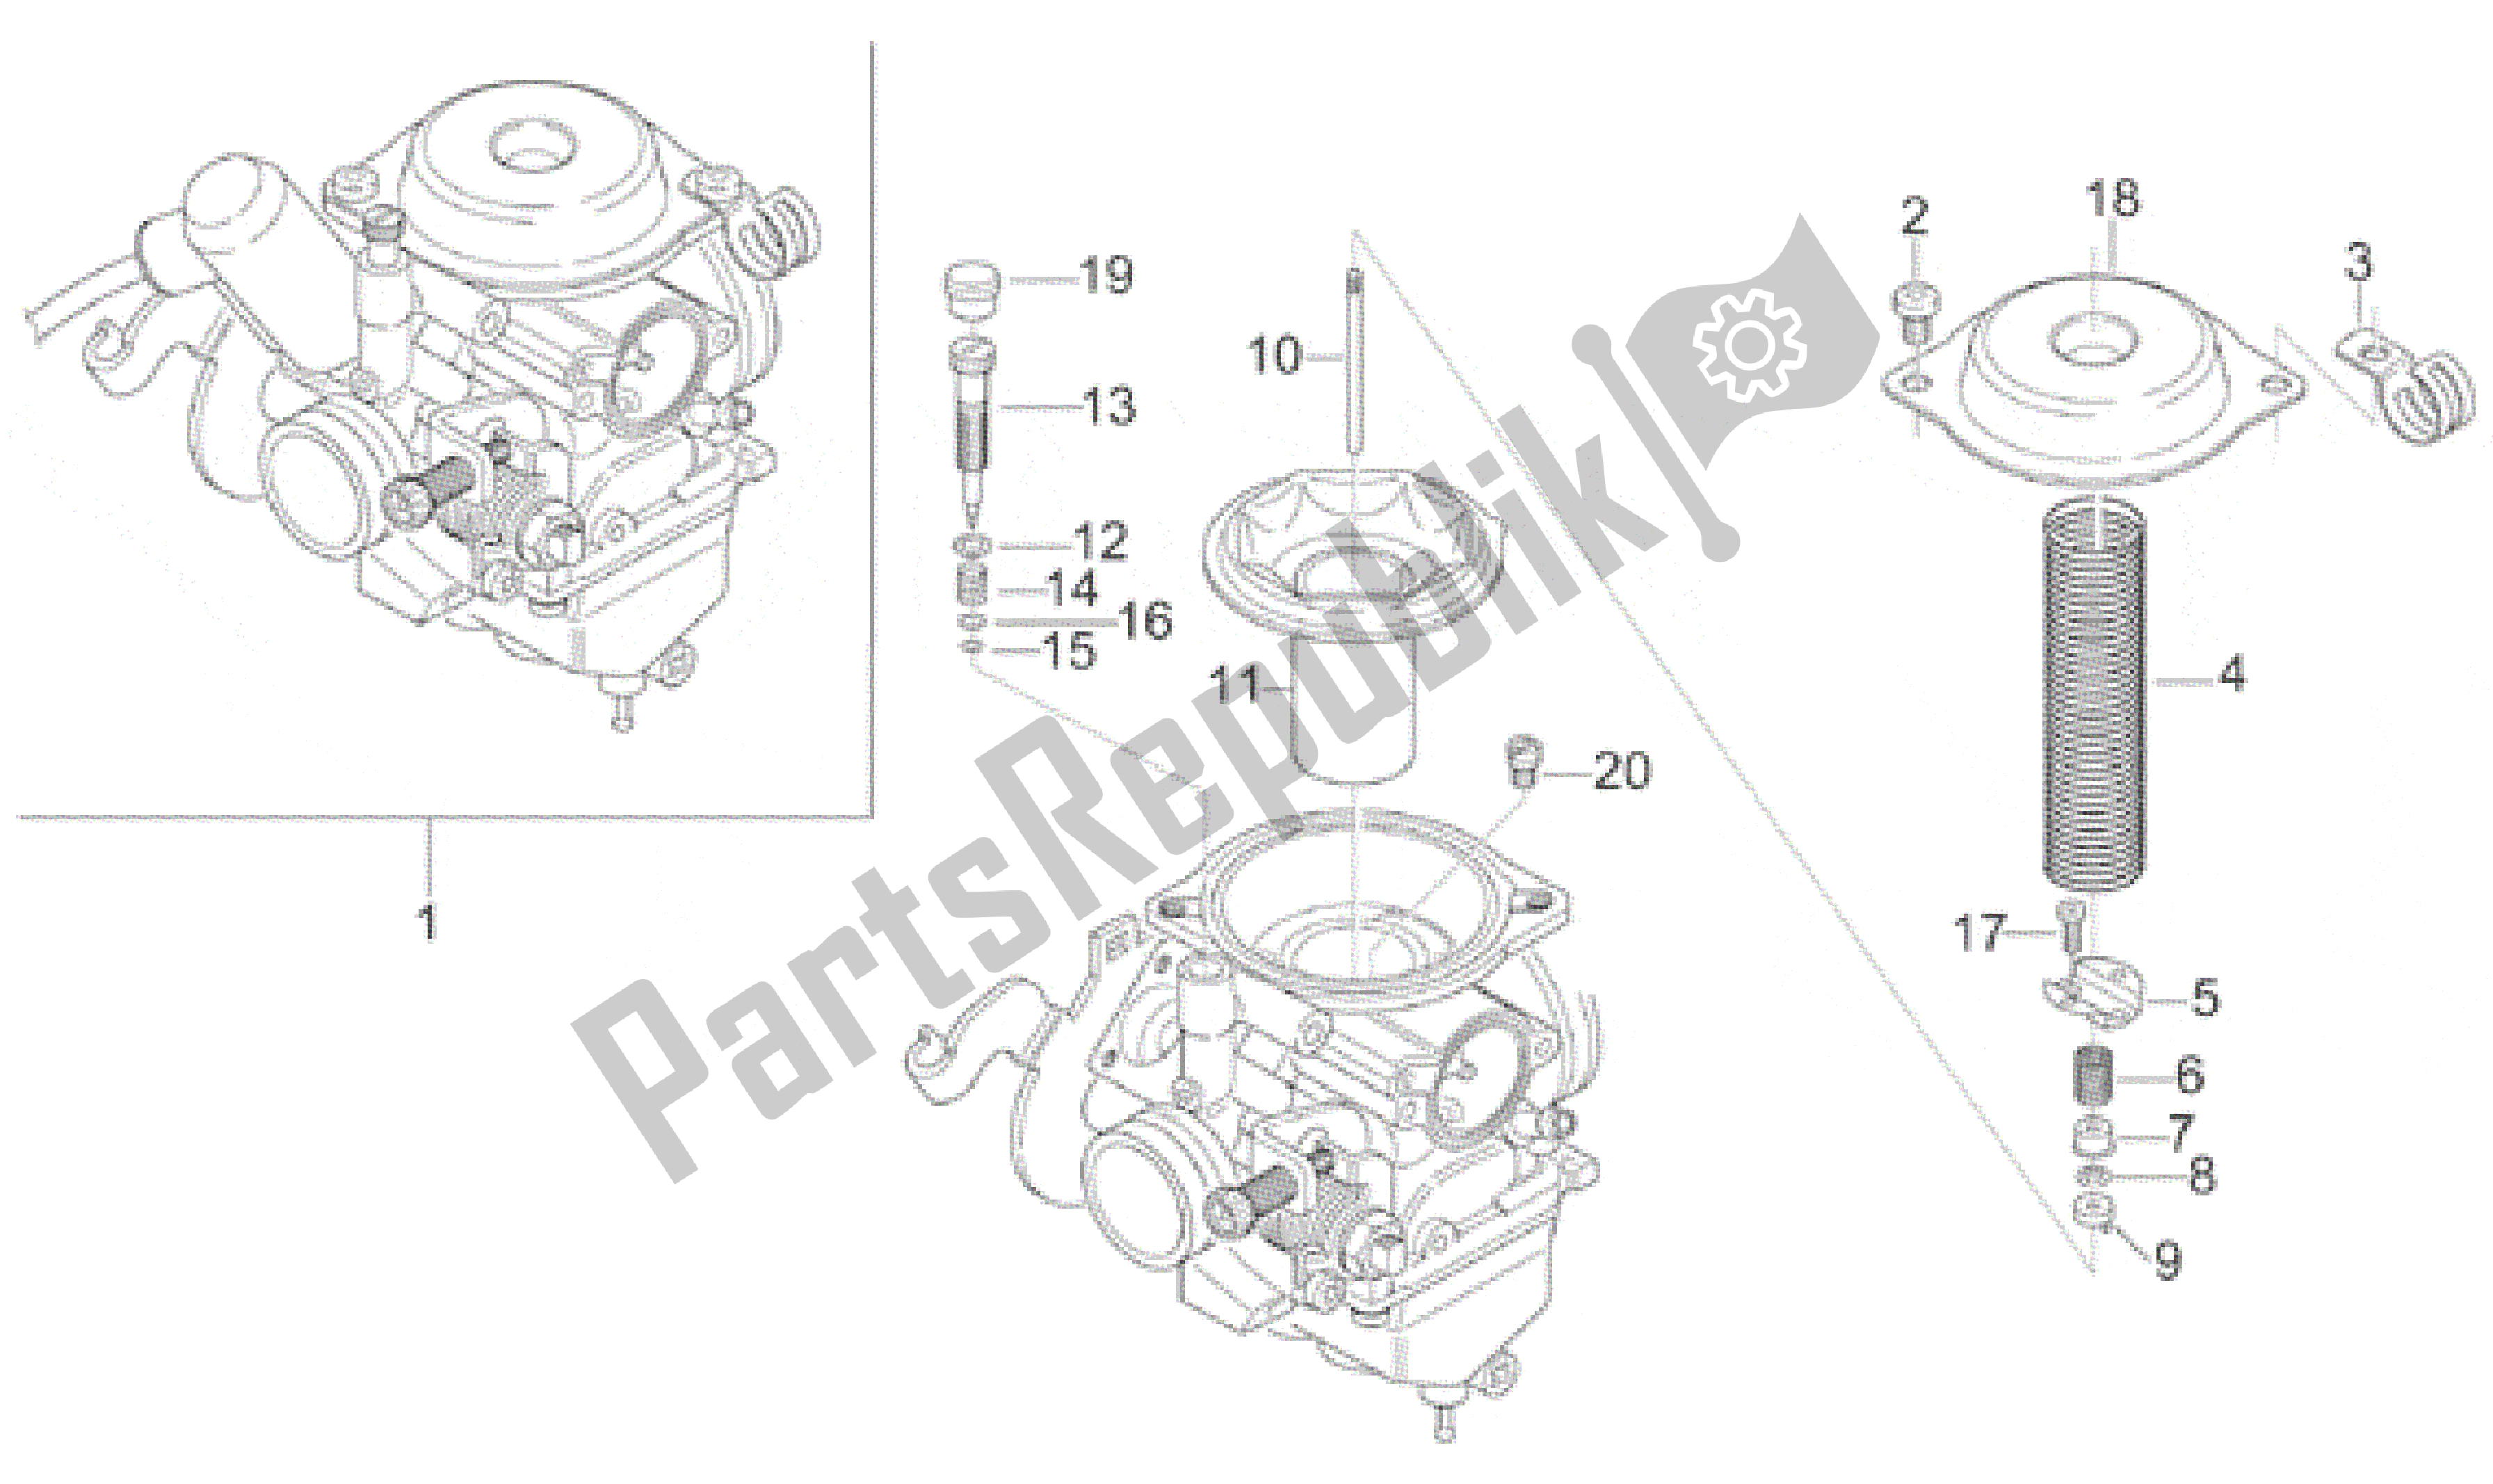 All parts for the Carburettor I of the Aprilia Leonardo 125 1999 - 2001